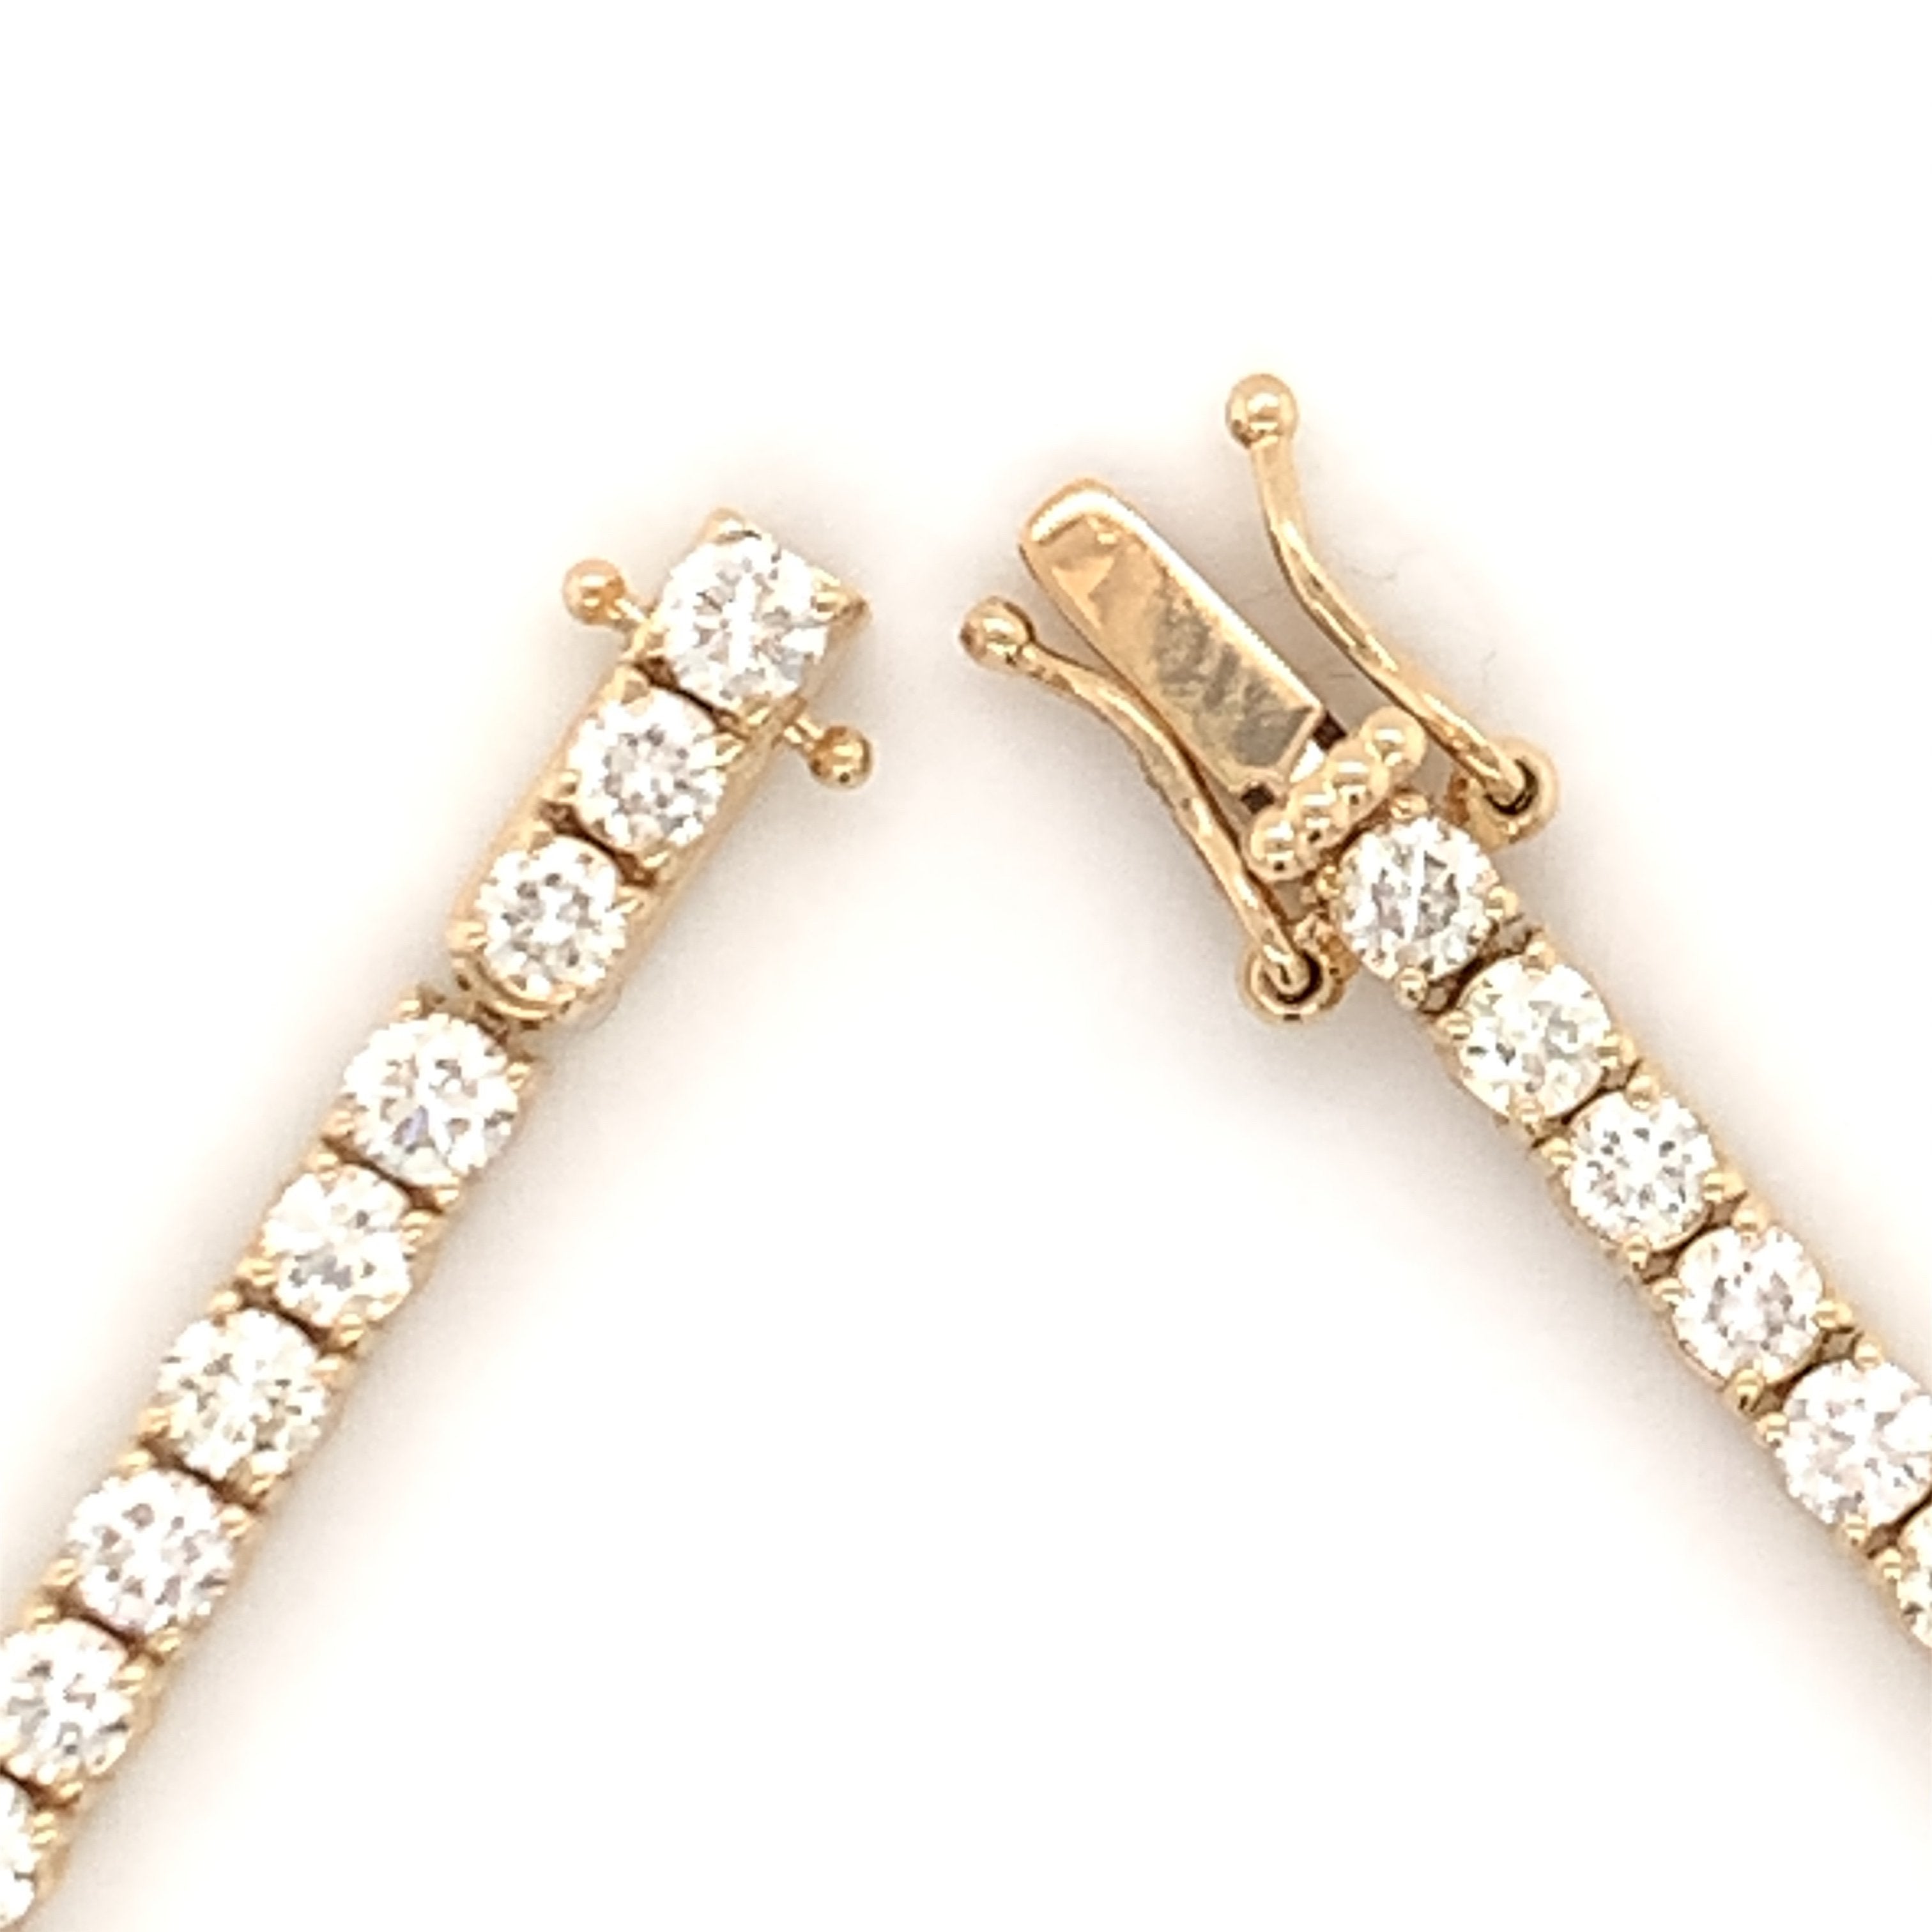 6.50 CT. Diamond Tennis Bracelet in Gold - White Carat - USA & Canada